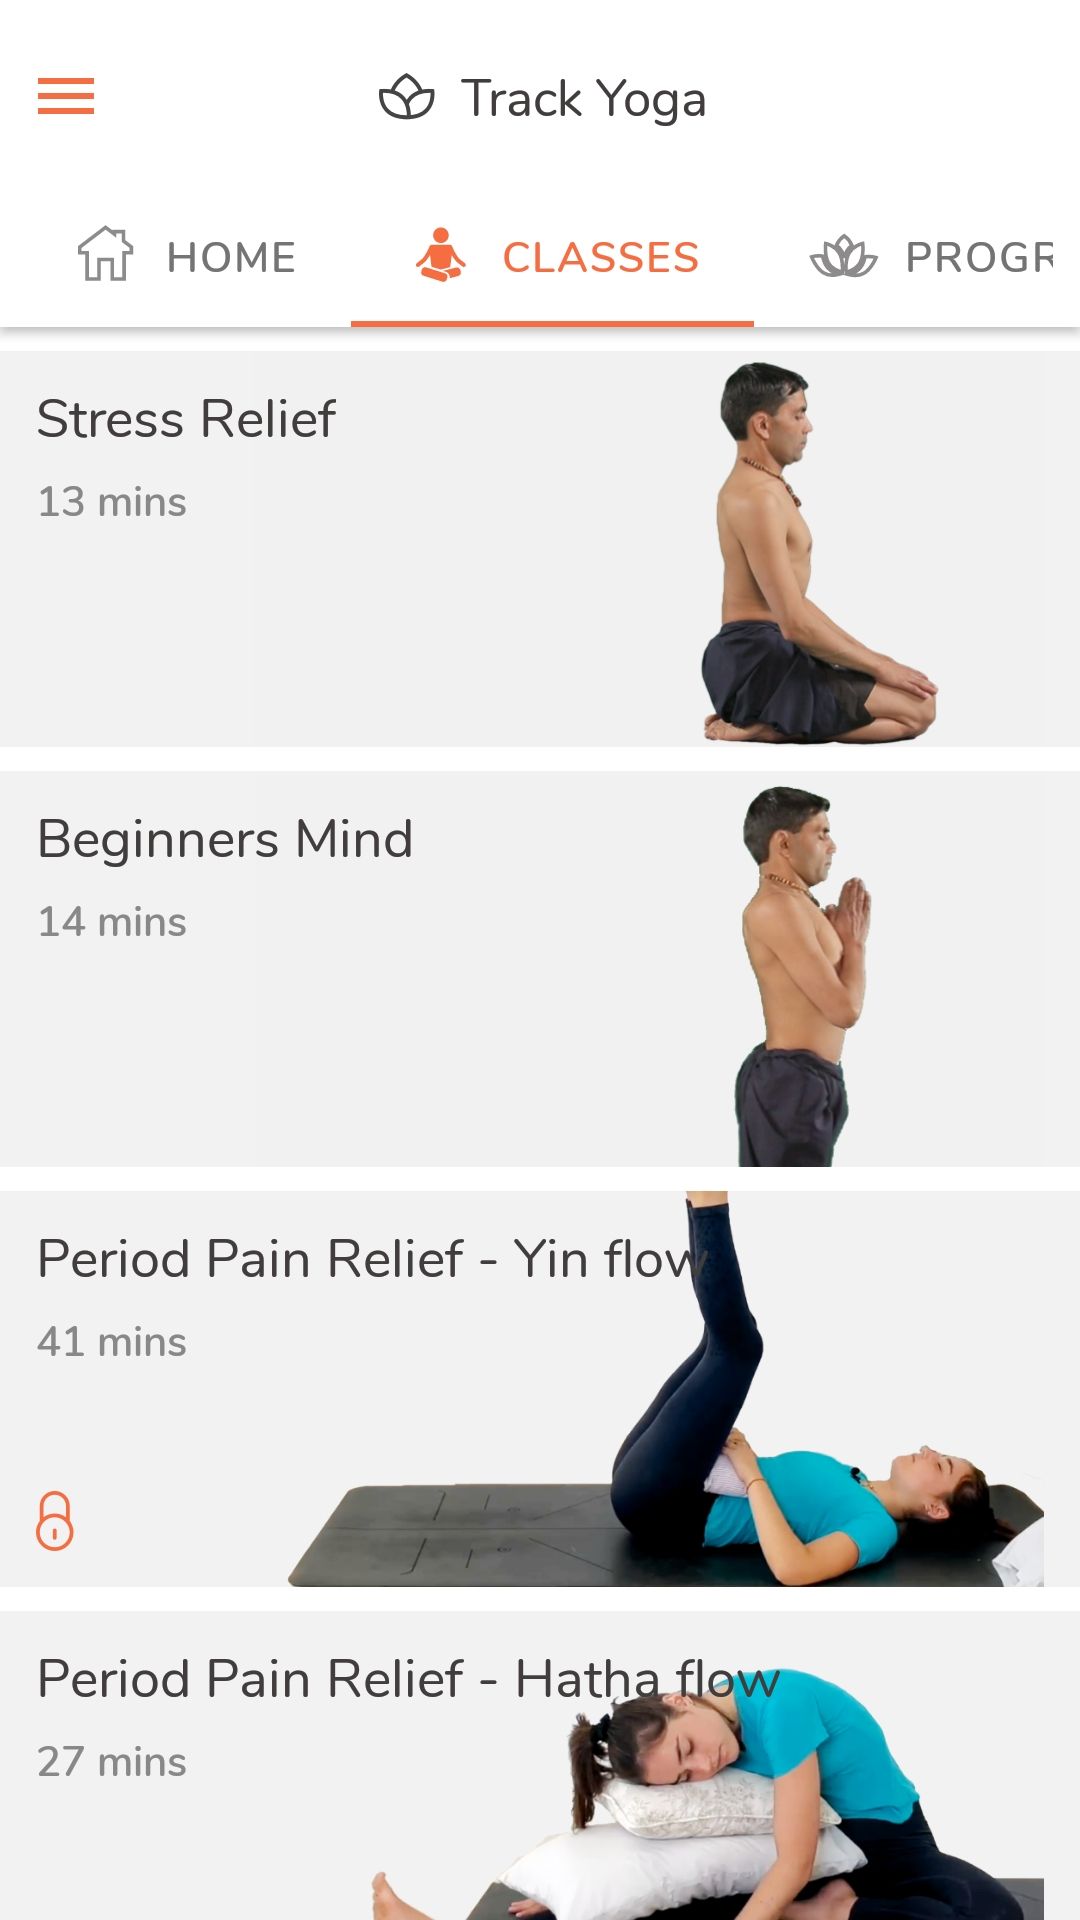 Track Yoga mobile yoga fitness app classes